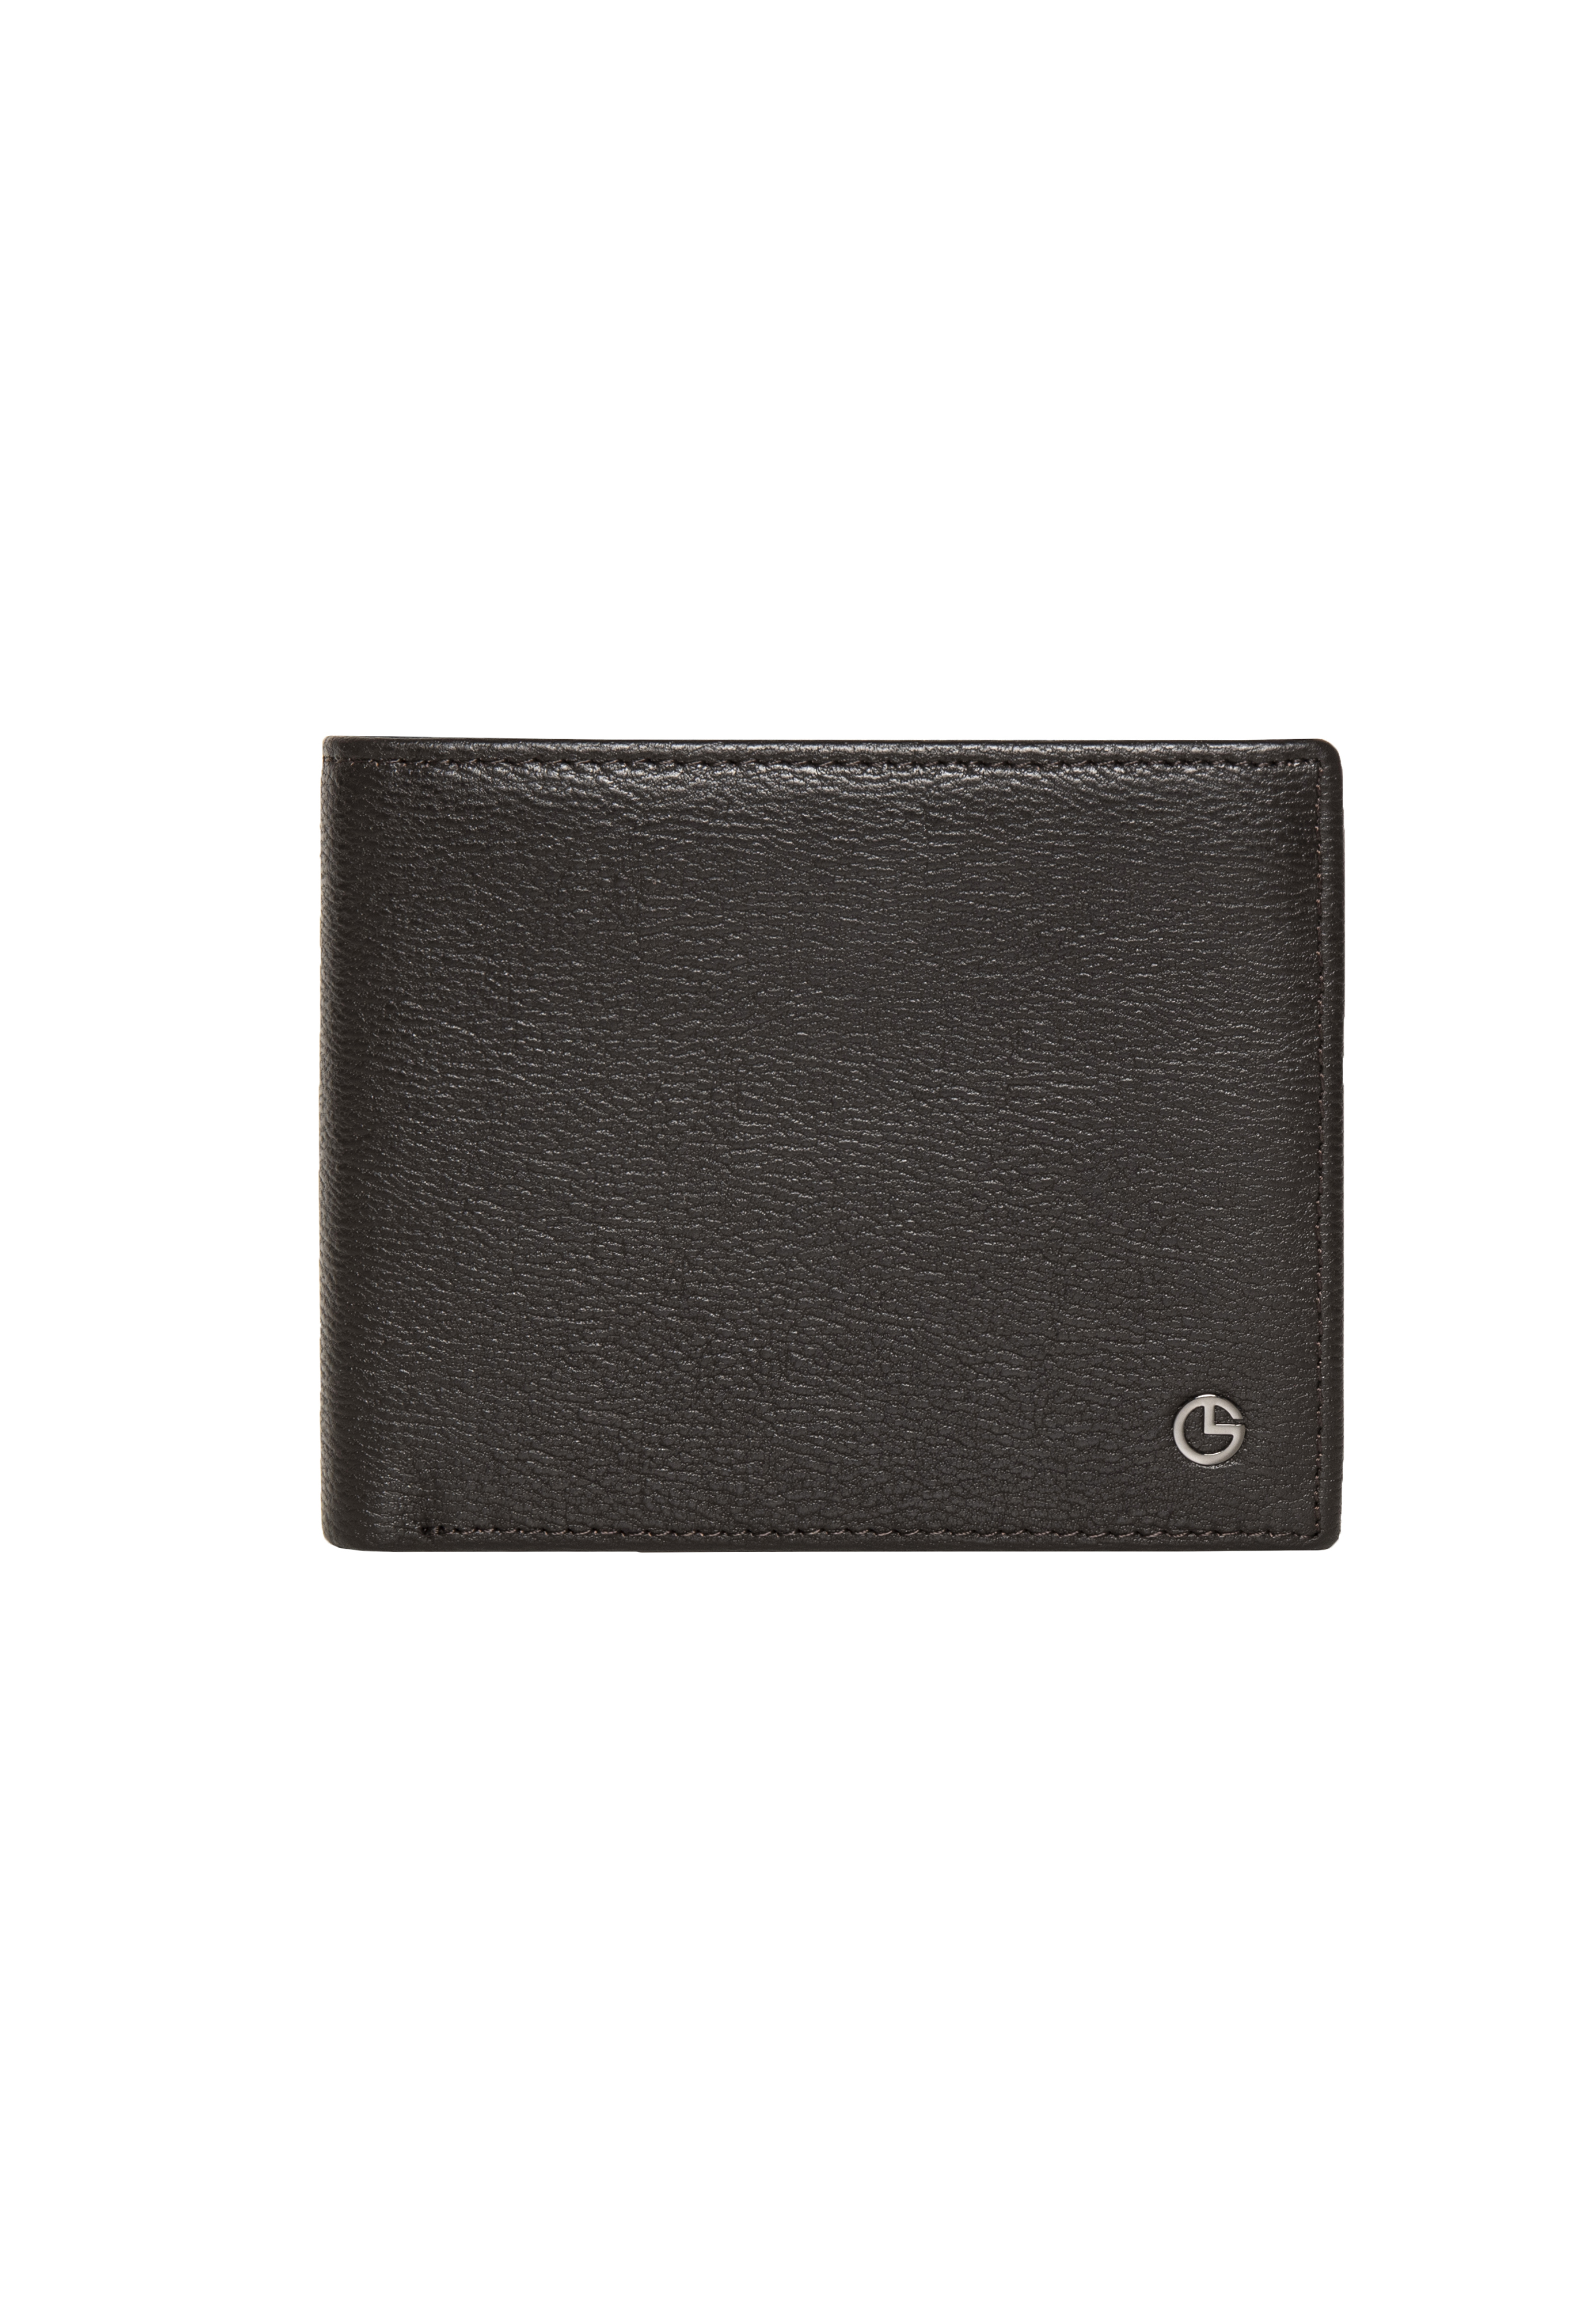 [Online Exclusive] Goldlion Men Genuine Leather Wallet (6 Cards Slot, Window Compartment)